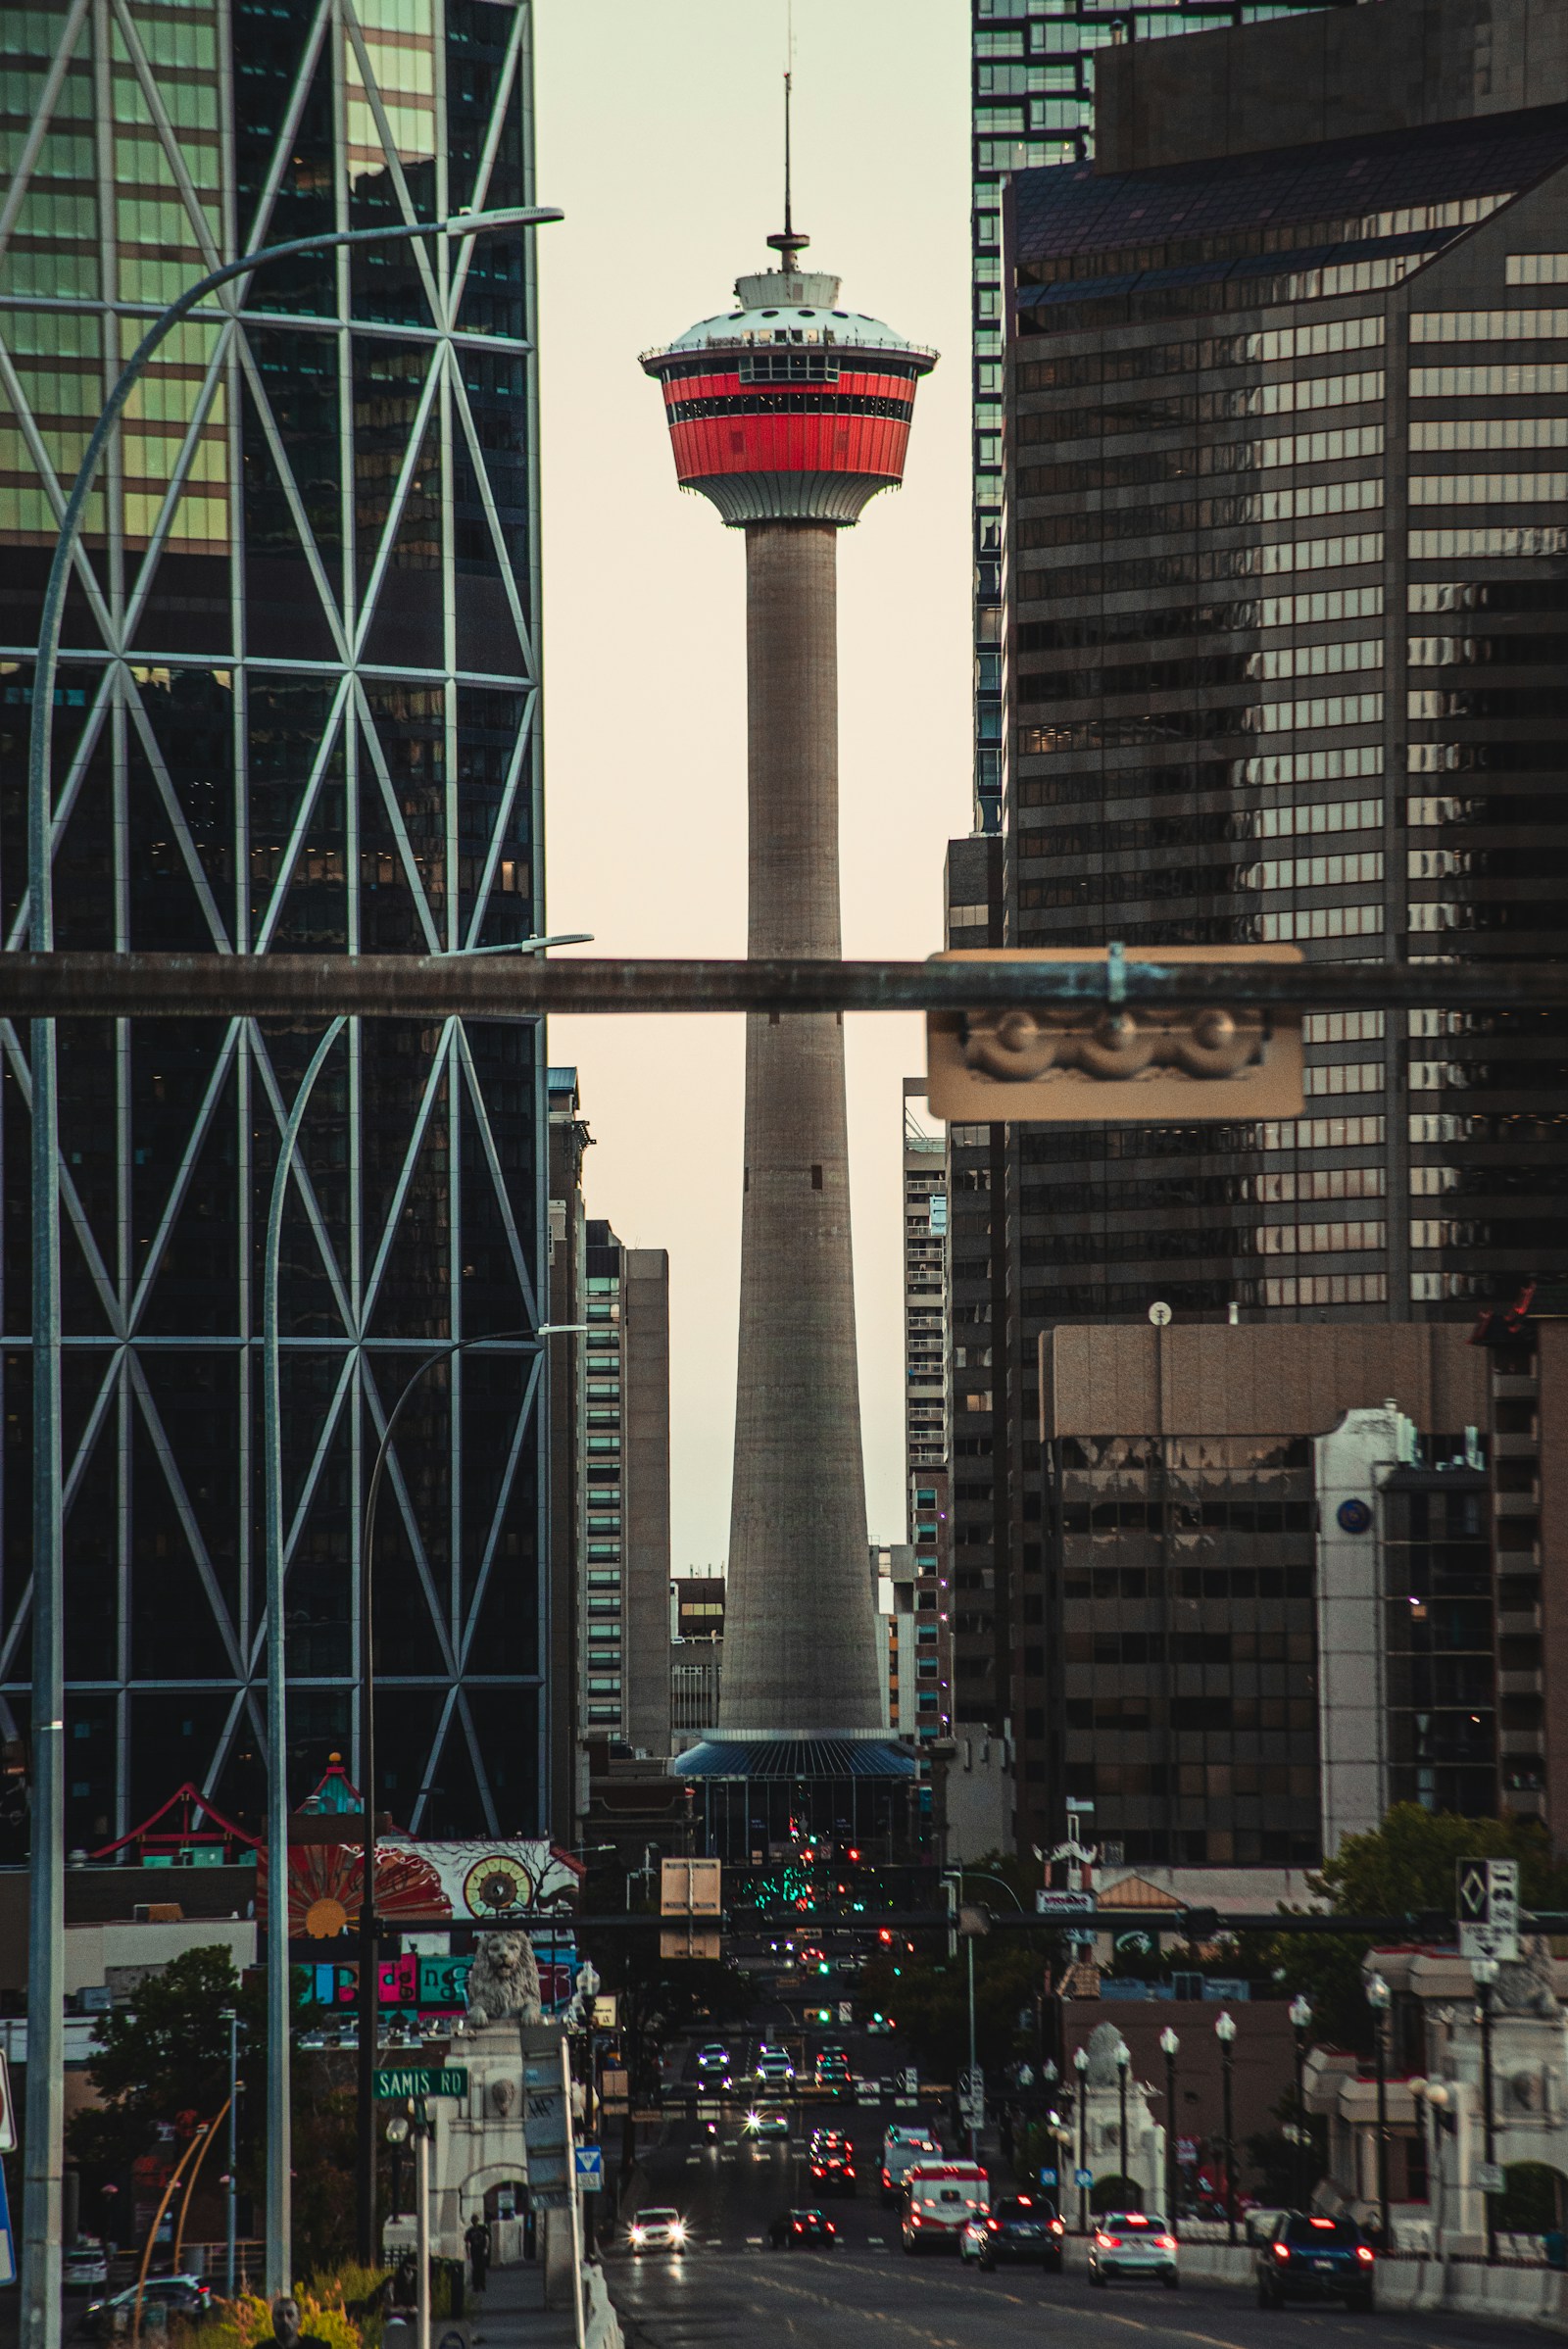 Calgary Tower in Downtown Calgary, Alberta